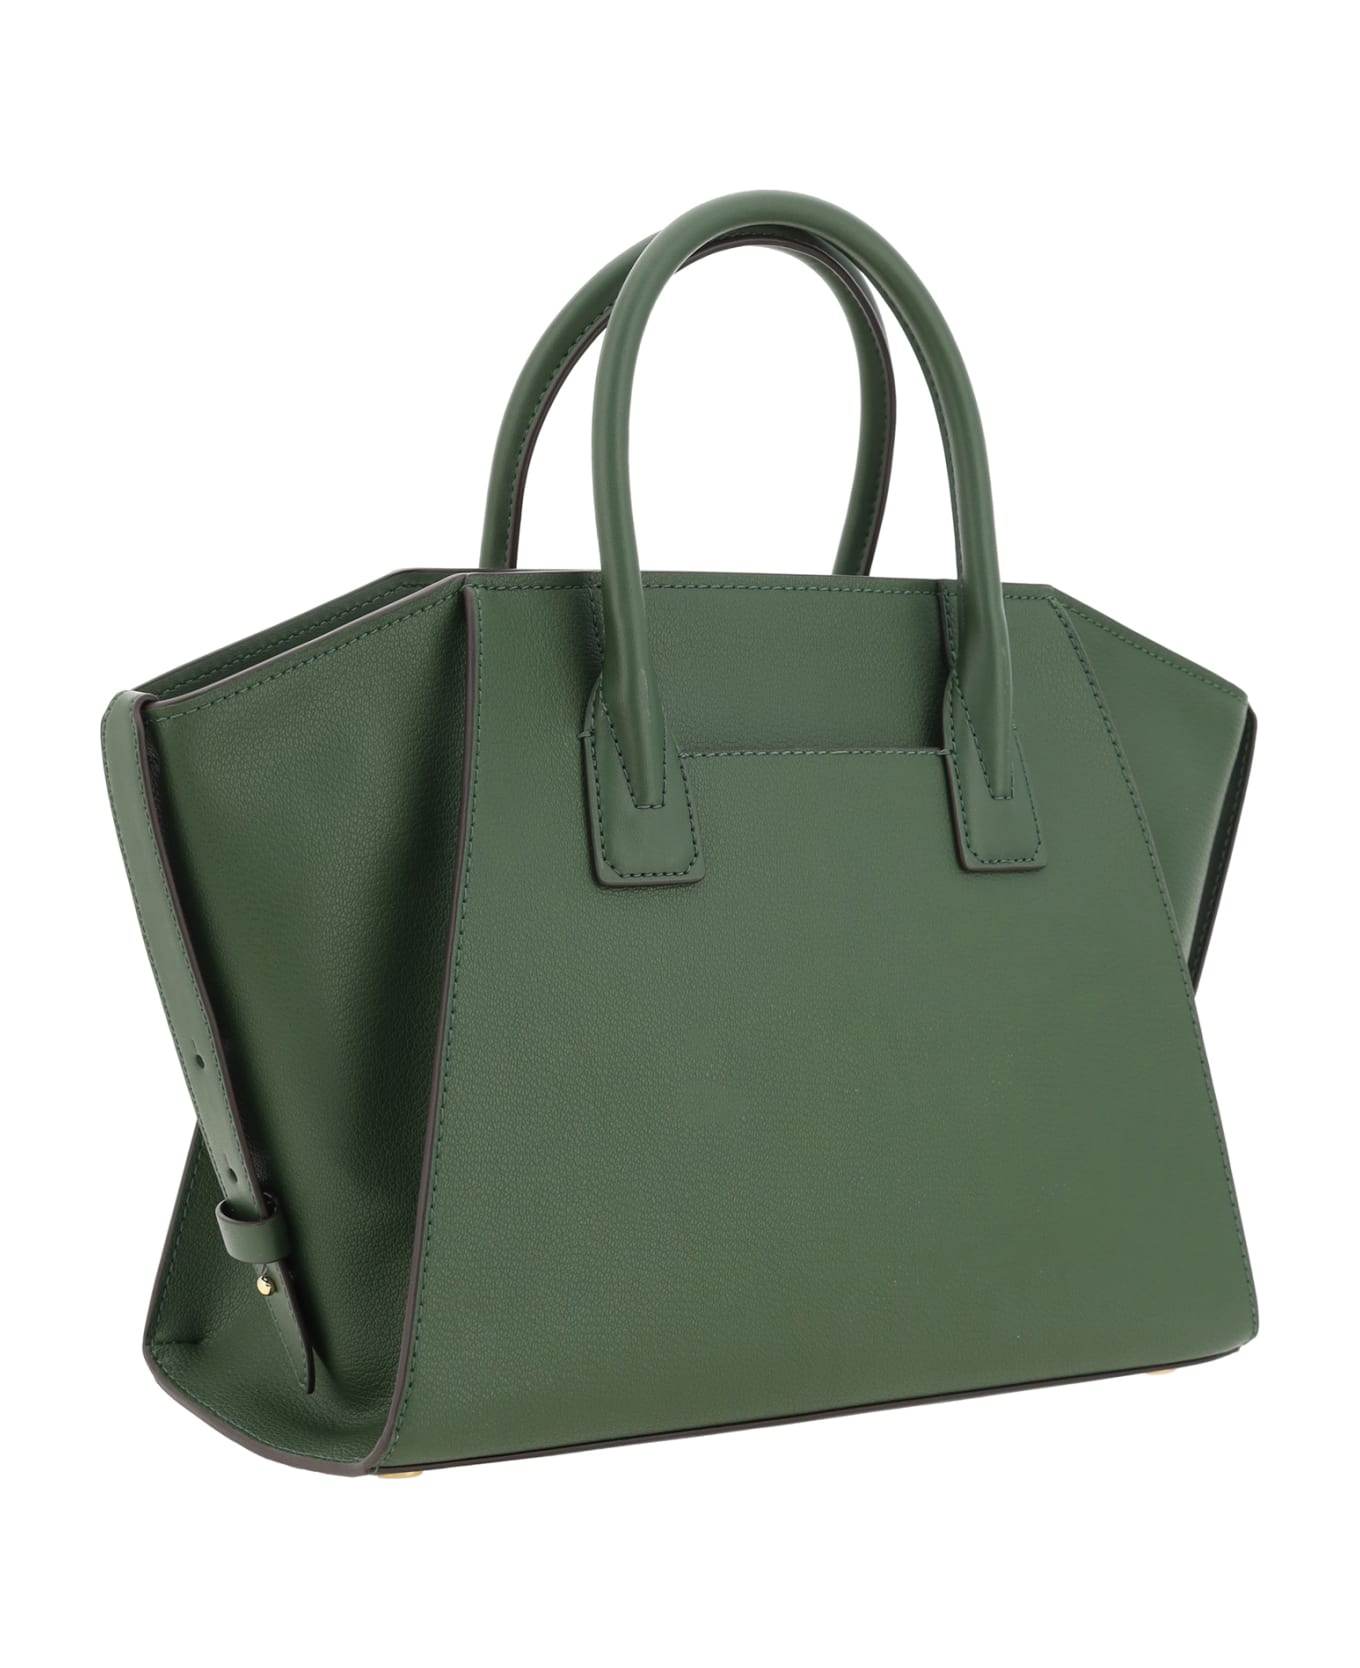 Michael Kors Avril Leather Handbag - green